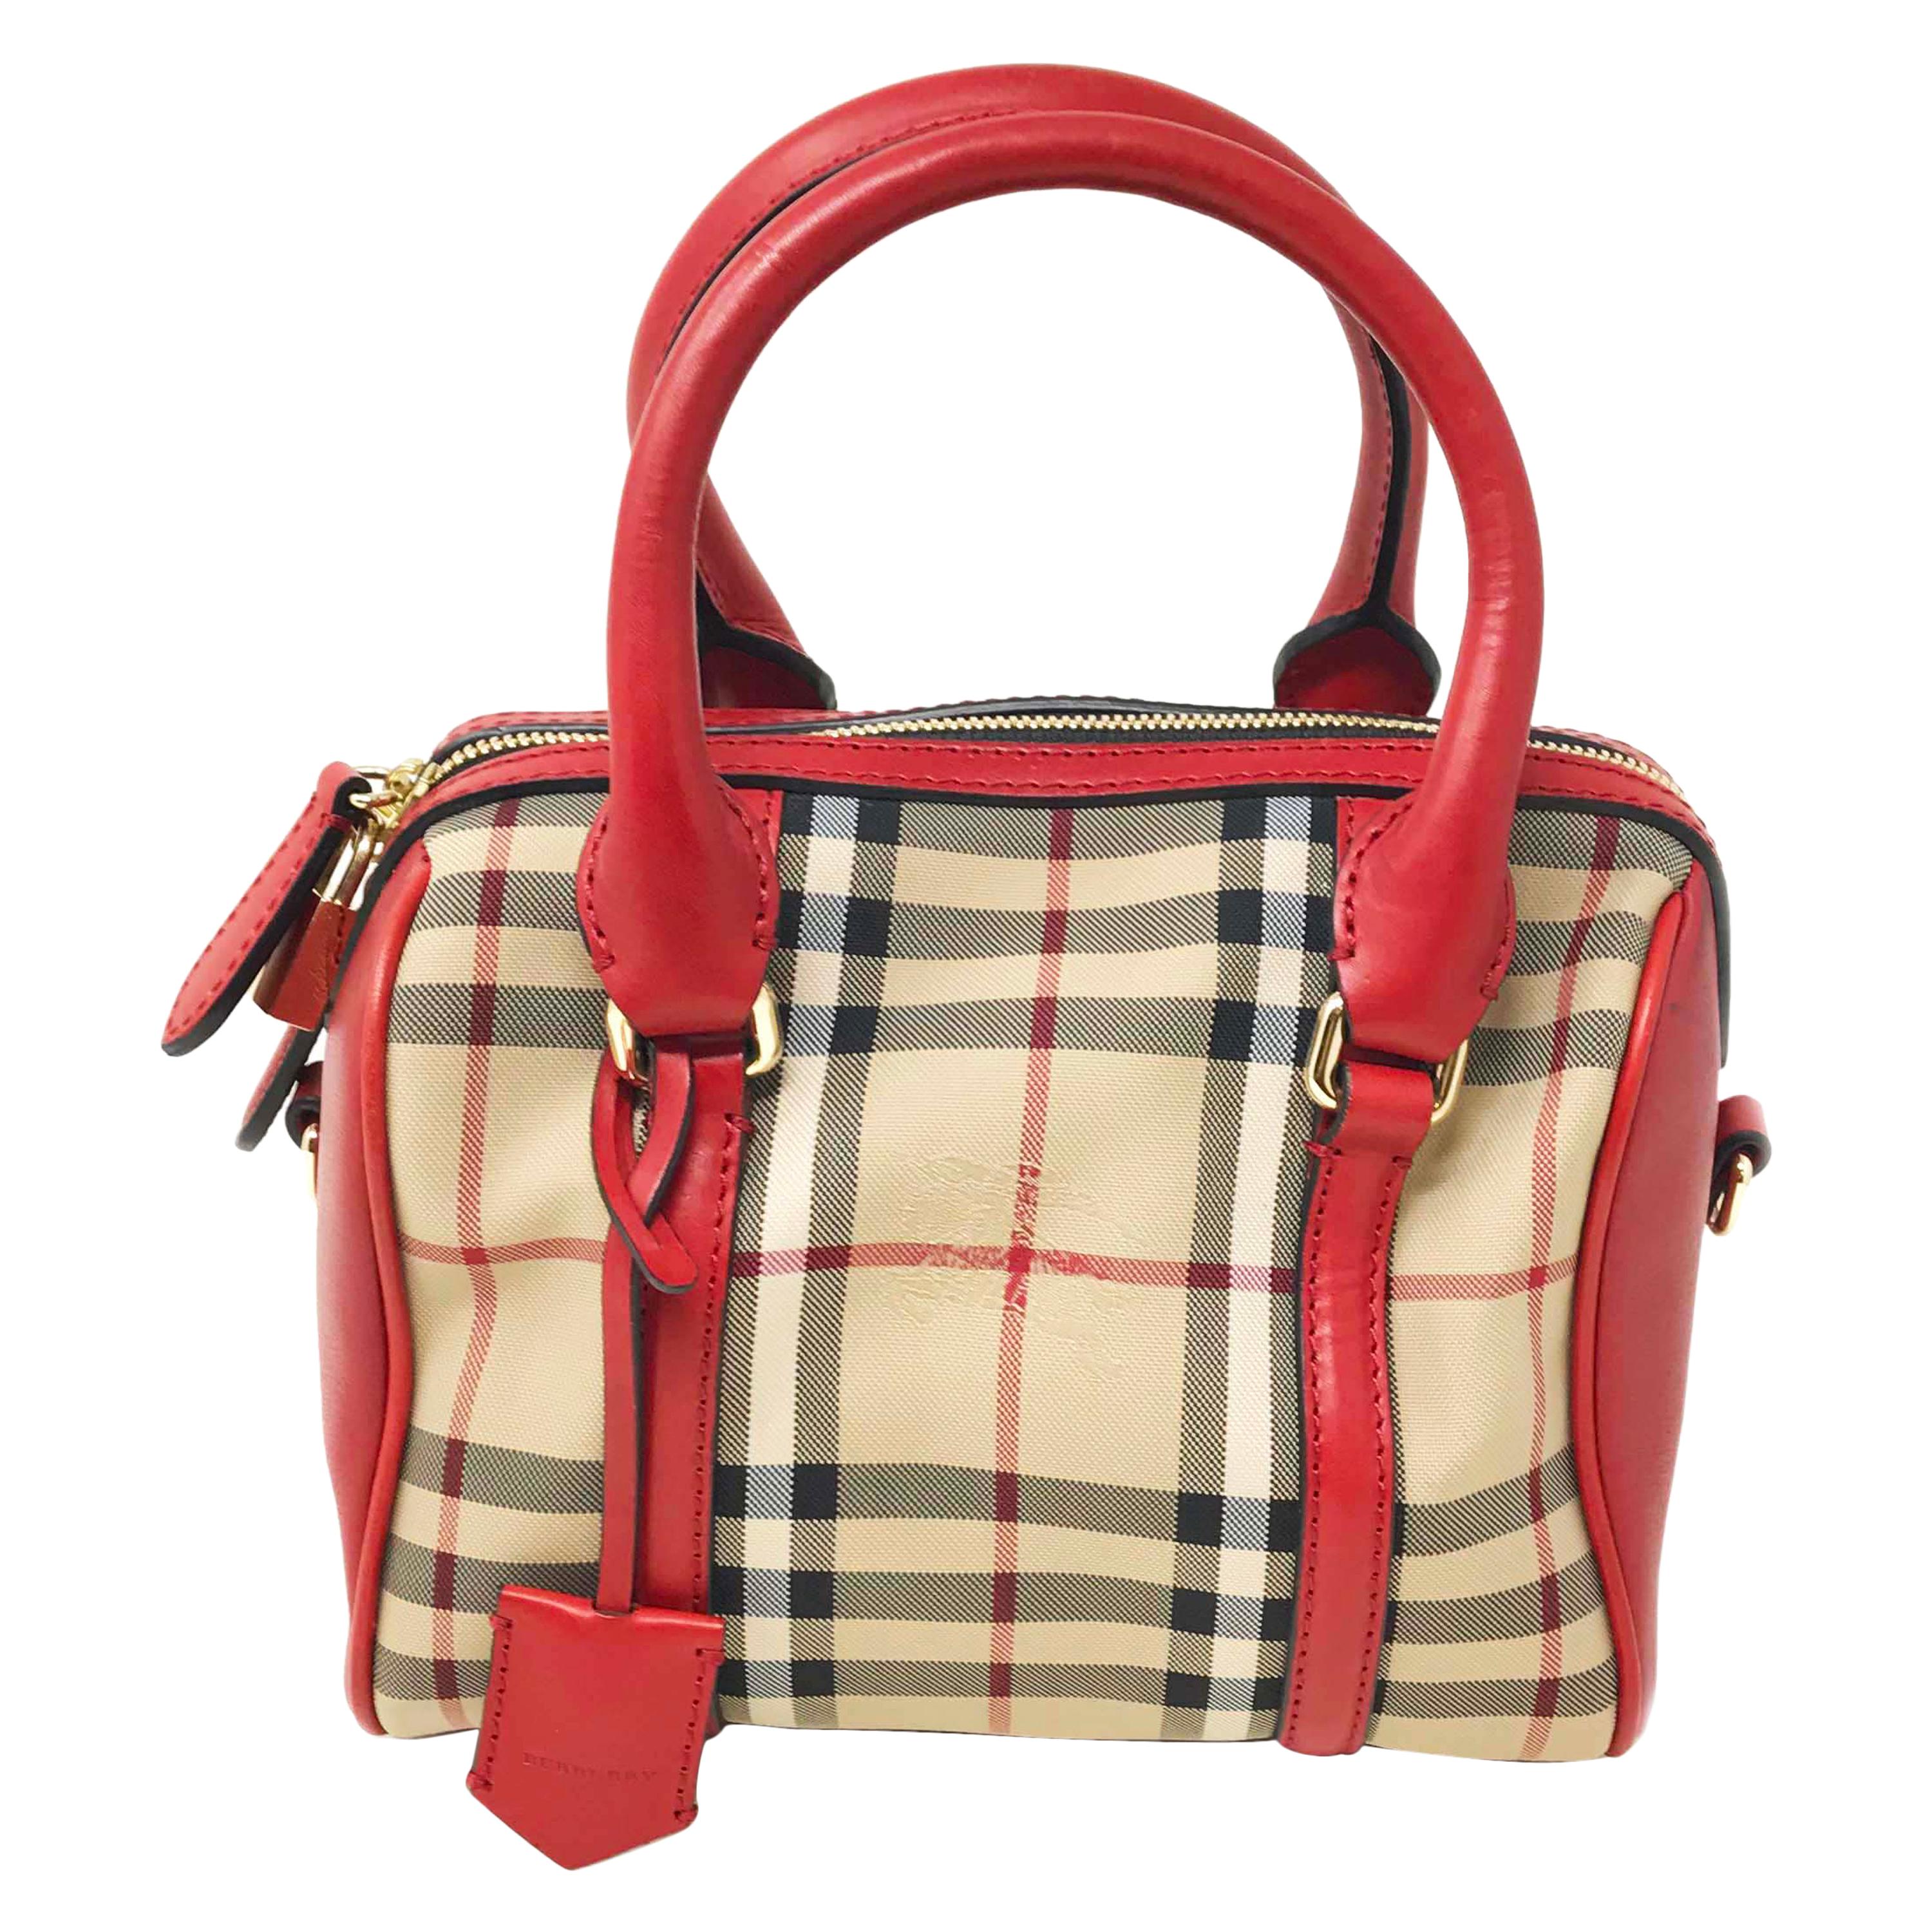 Burberry 3925930 Small Alchester Beige Red Ladies Handbag Purse